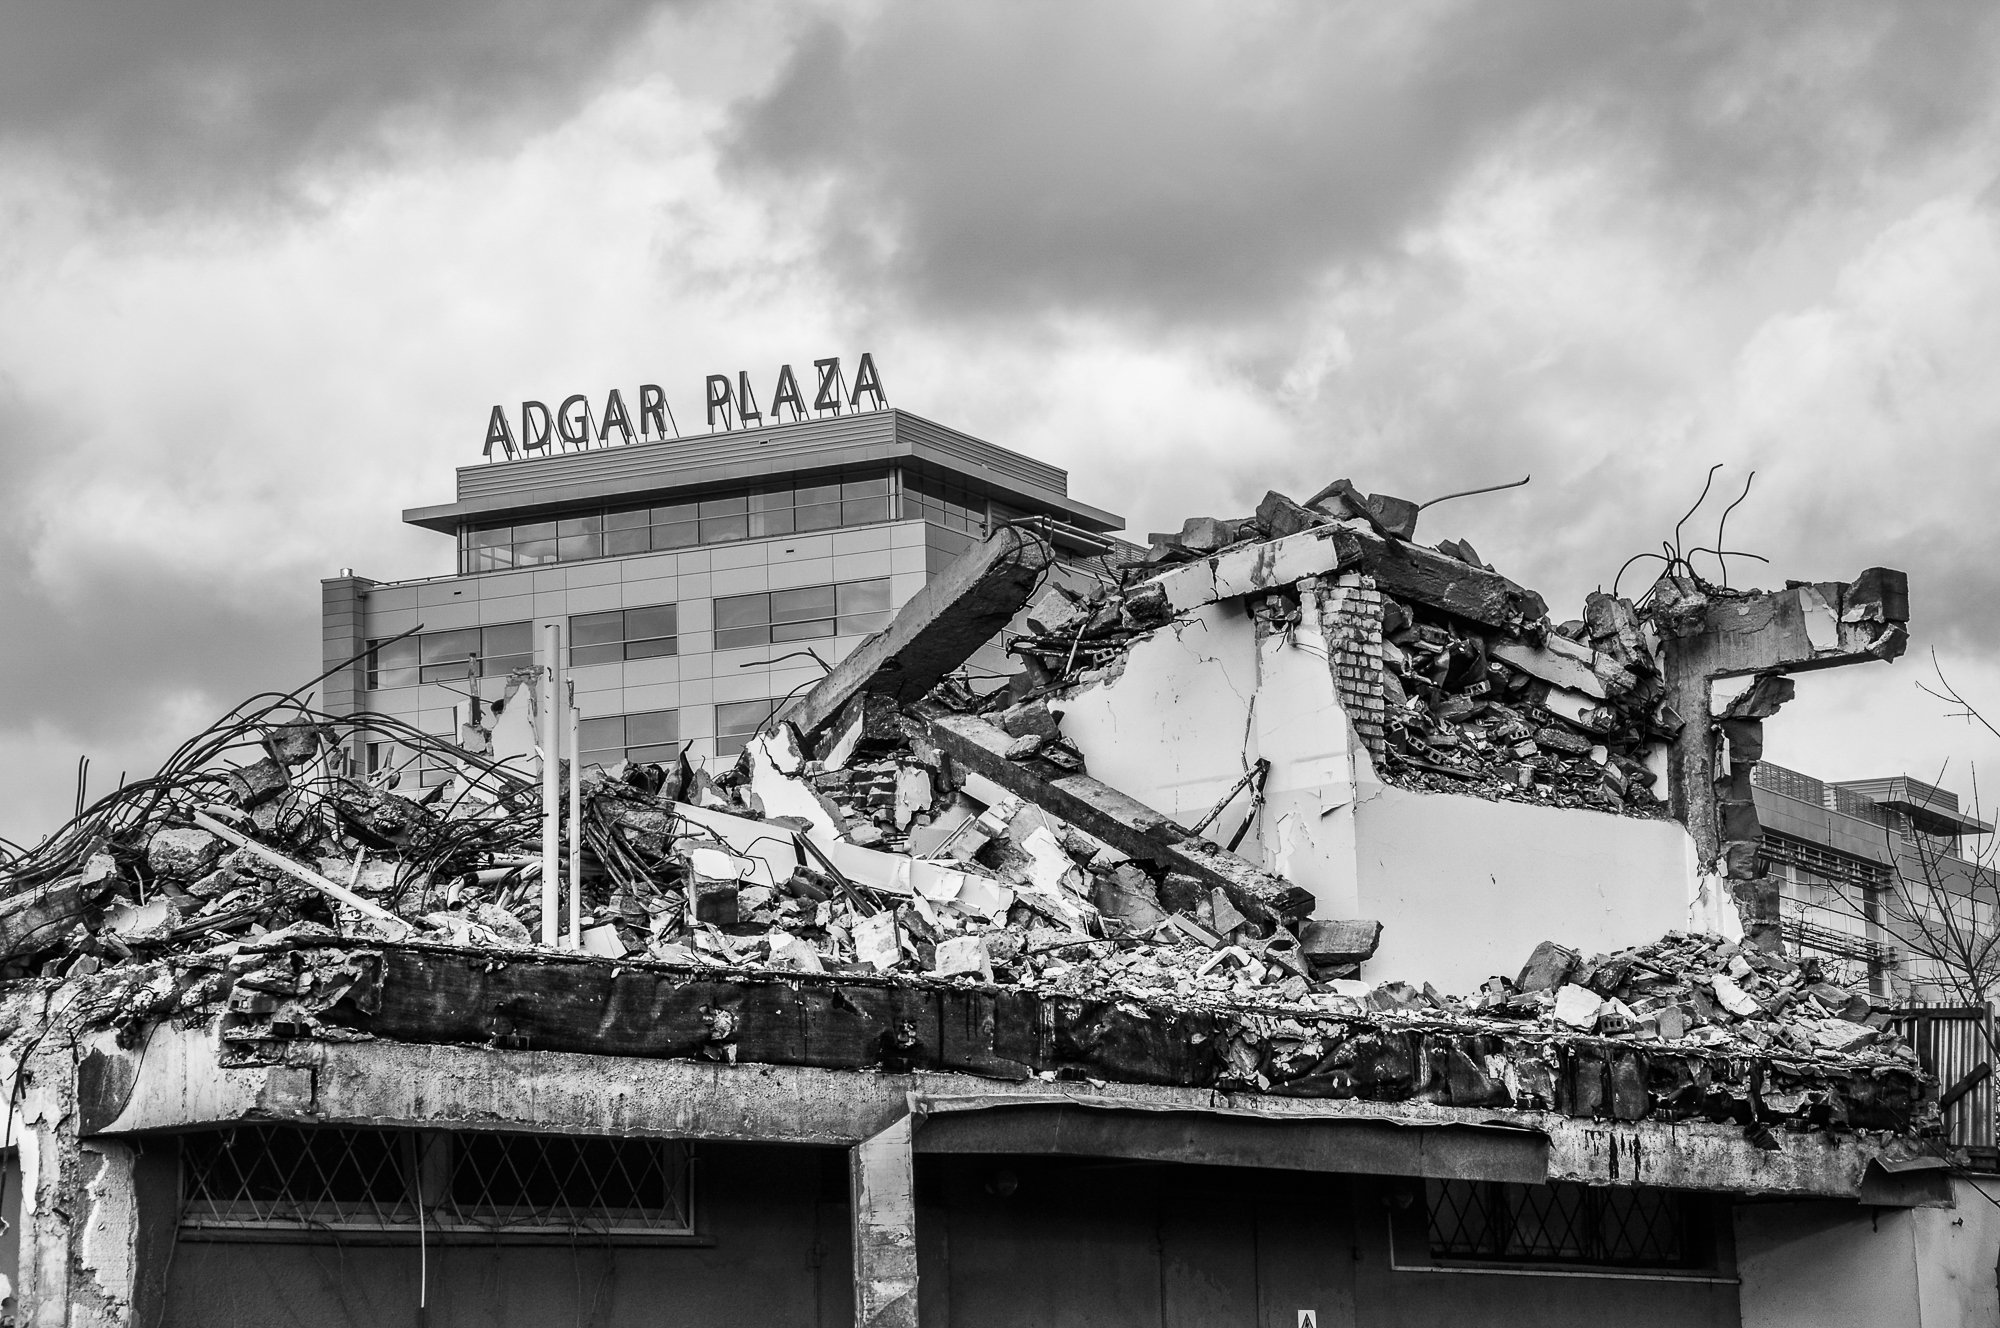 Adam Mazek Photography Warsaw (Warszawa) 2012. Post: "Wandering through the streets." Adgar Plaza and destroyed building. Minimalism.